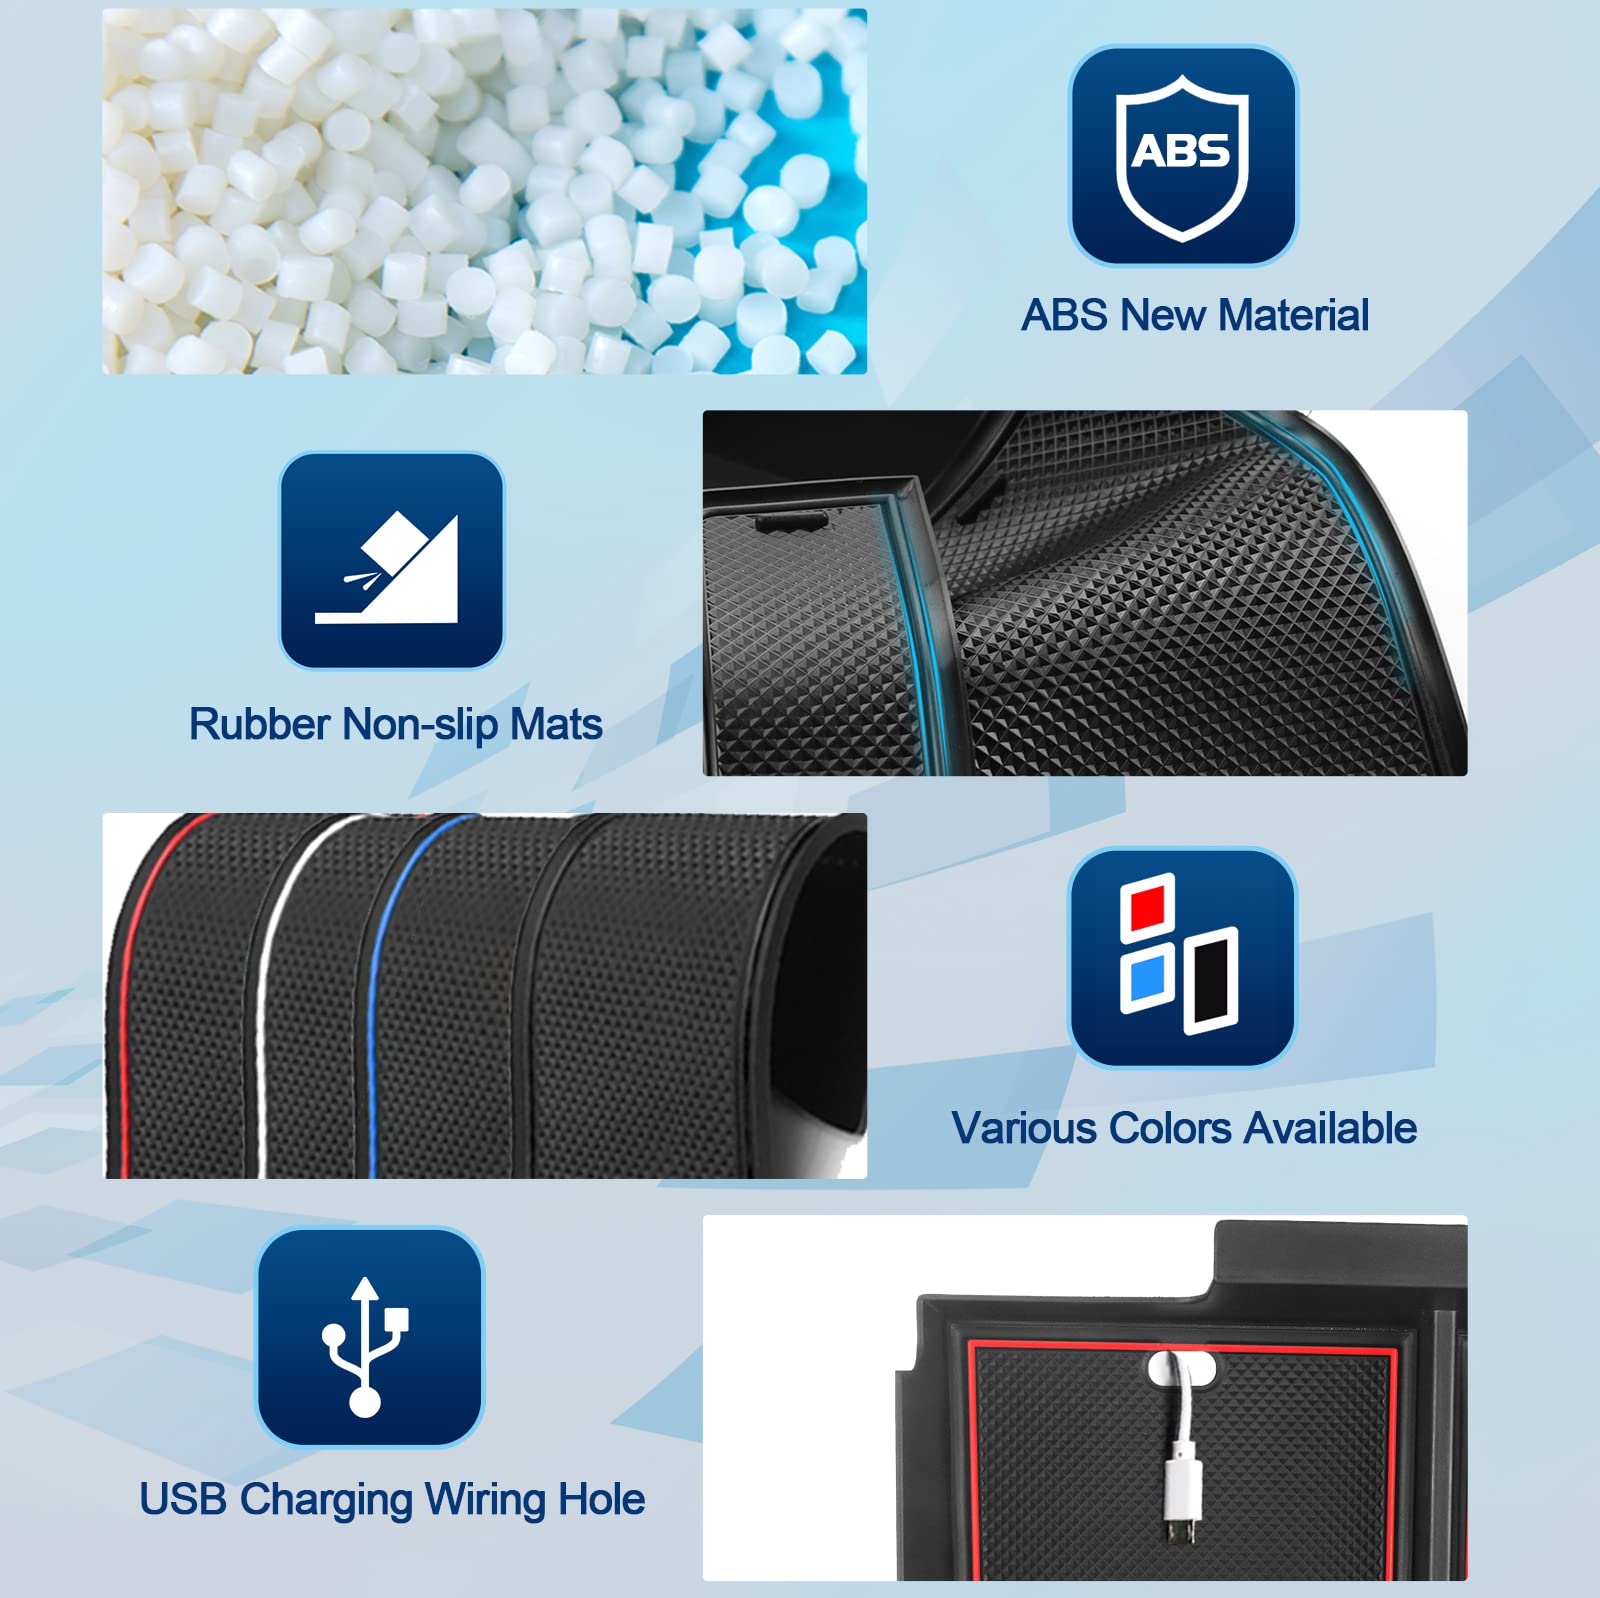 Hyundai Palisade Center Console Organizer Tray 2020+ - LFOTPP Car Accessories